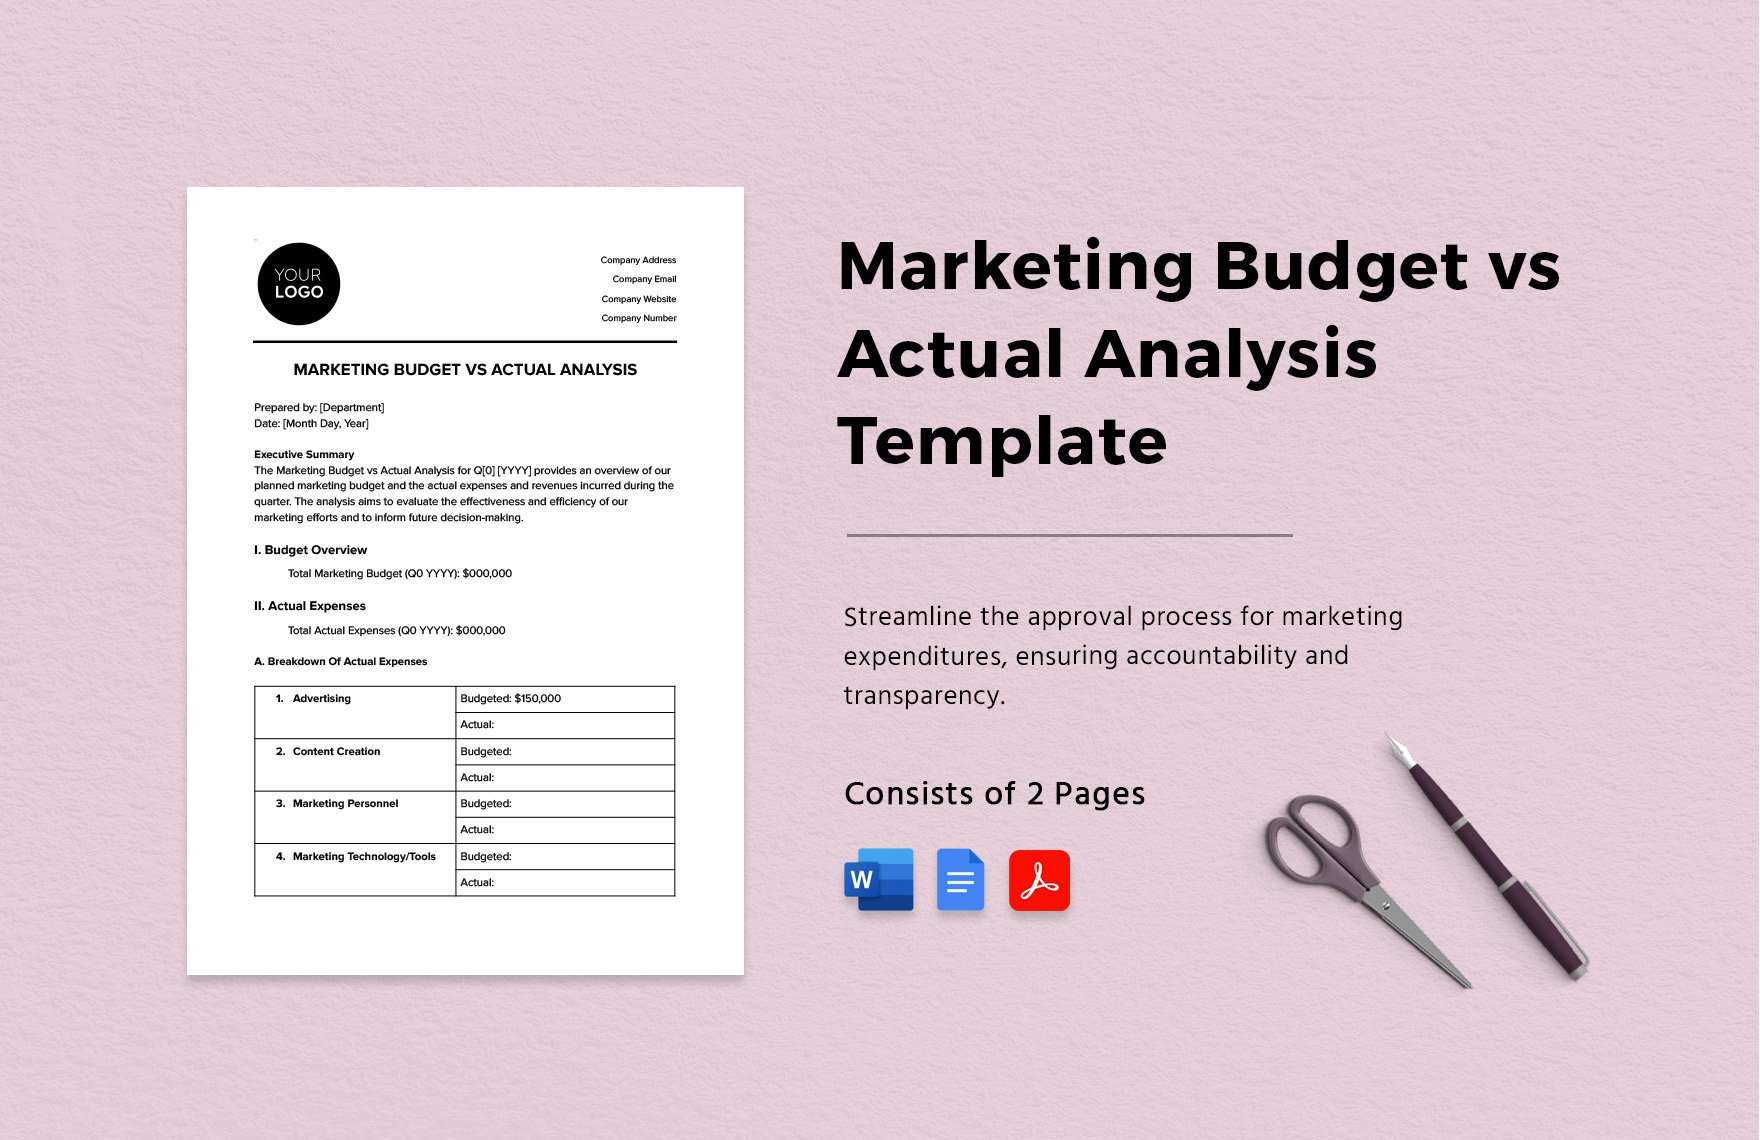  Marketing Budget vs Actual Analysis Template